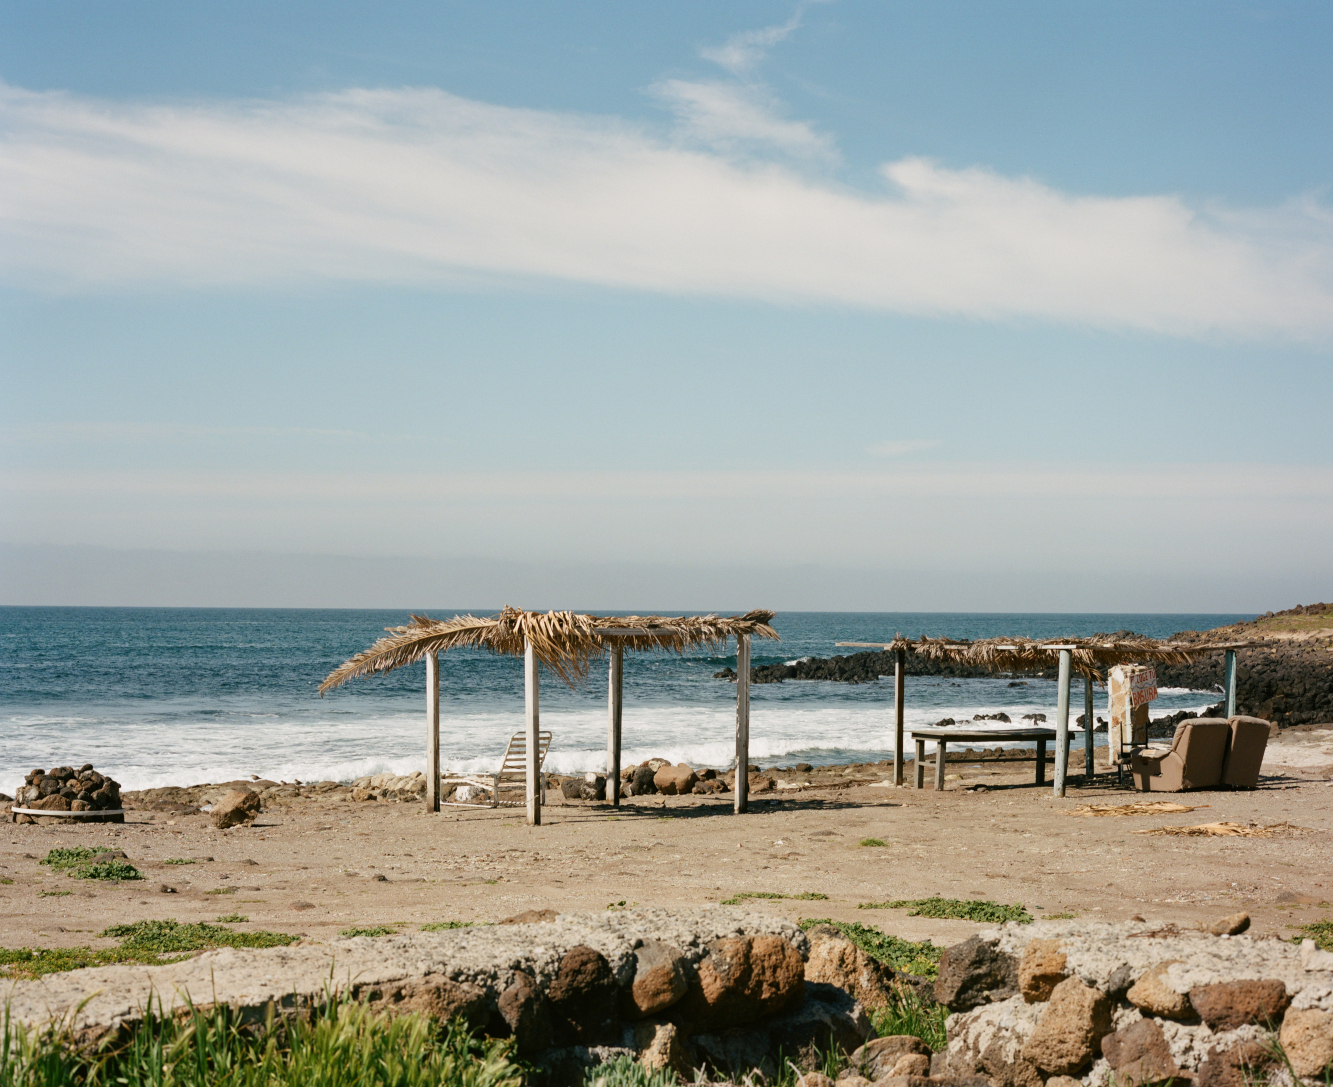 Color medium format film photograph of a beach in Baja California, Mexico.